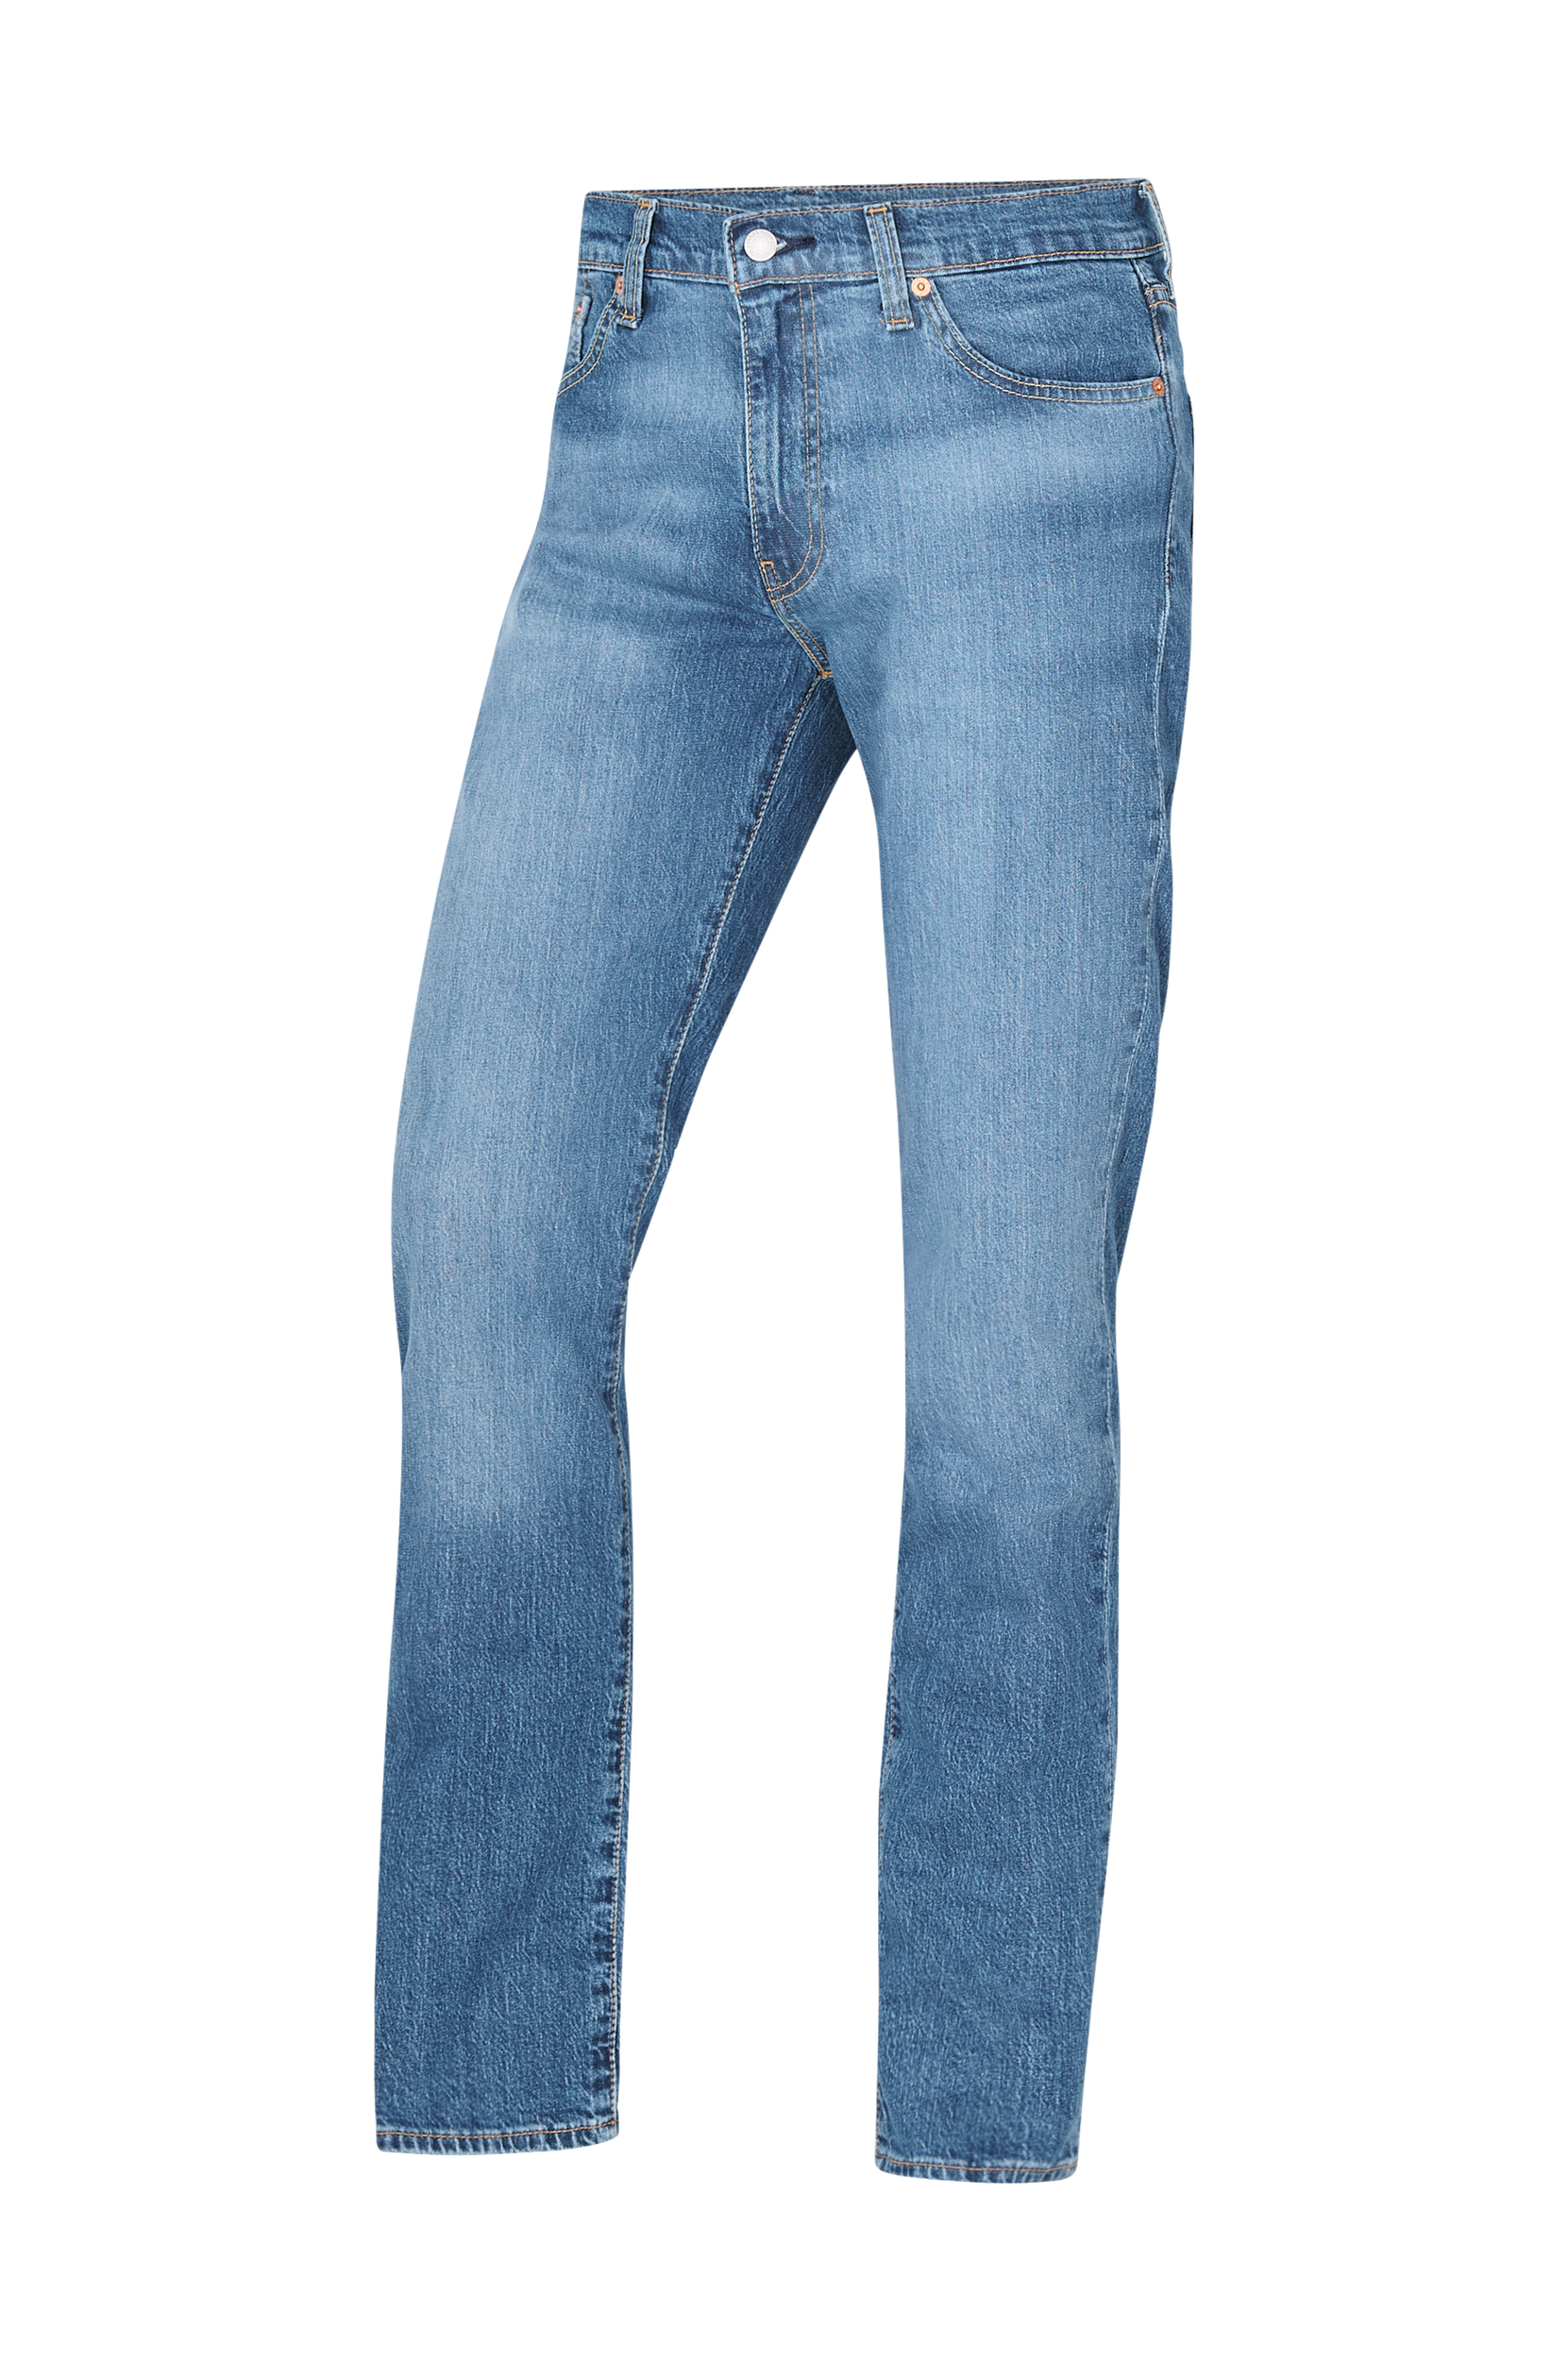 Levi's - Jeans 511, slim fit - Blå - W29/L32